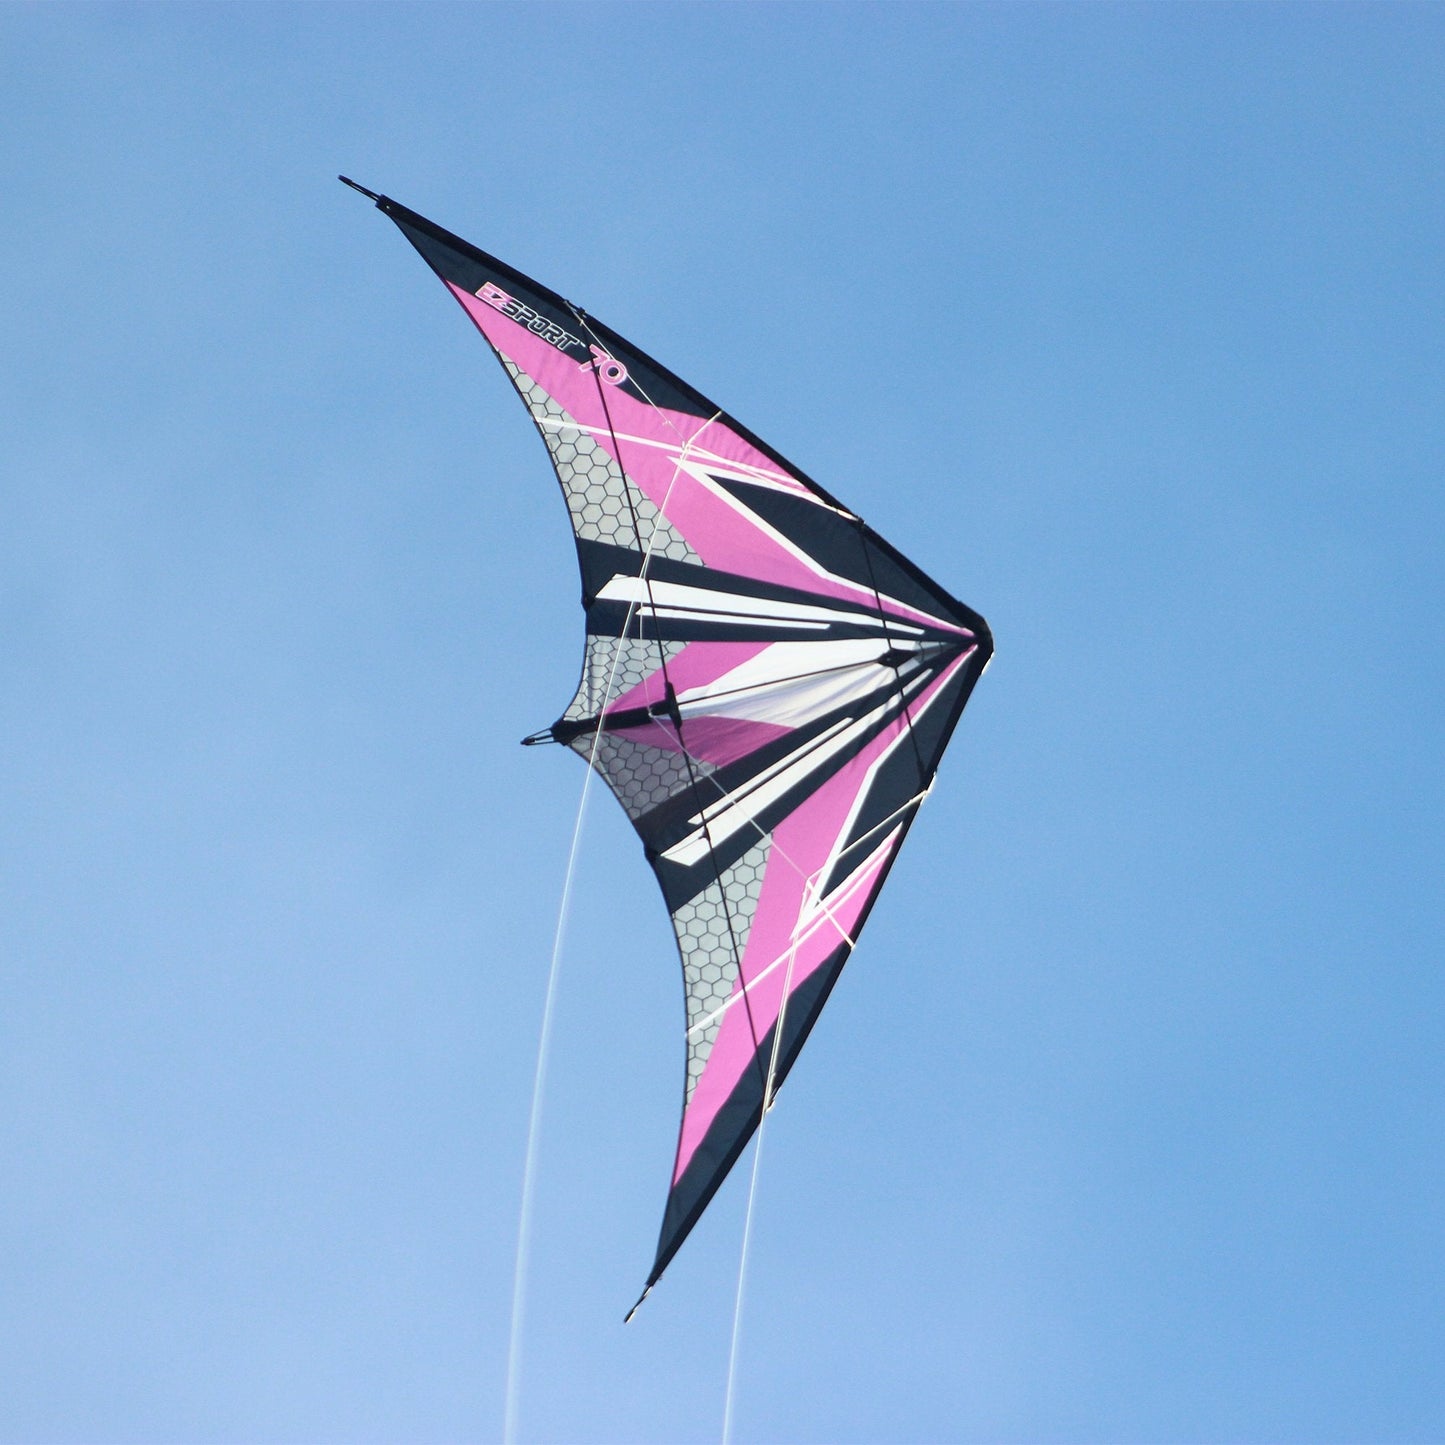 WindNSun EZ Sport 70 Teal Hex Kite in flight